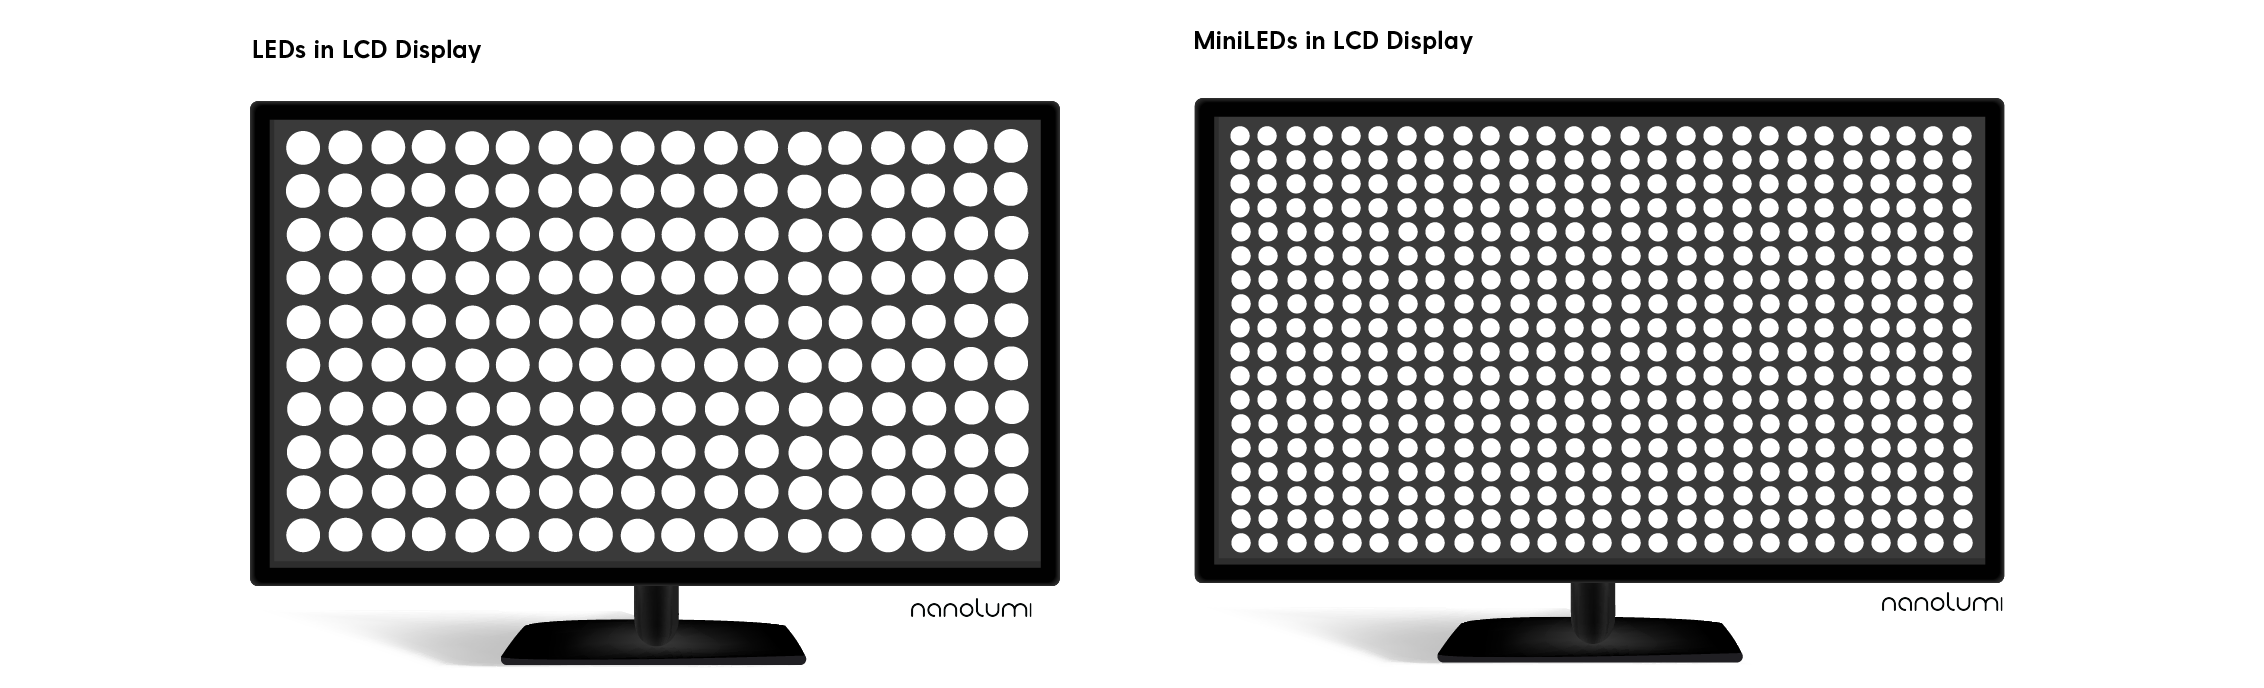 LED and MiniLED Backlight Nanolumi